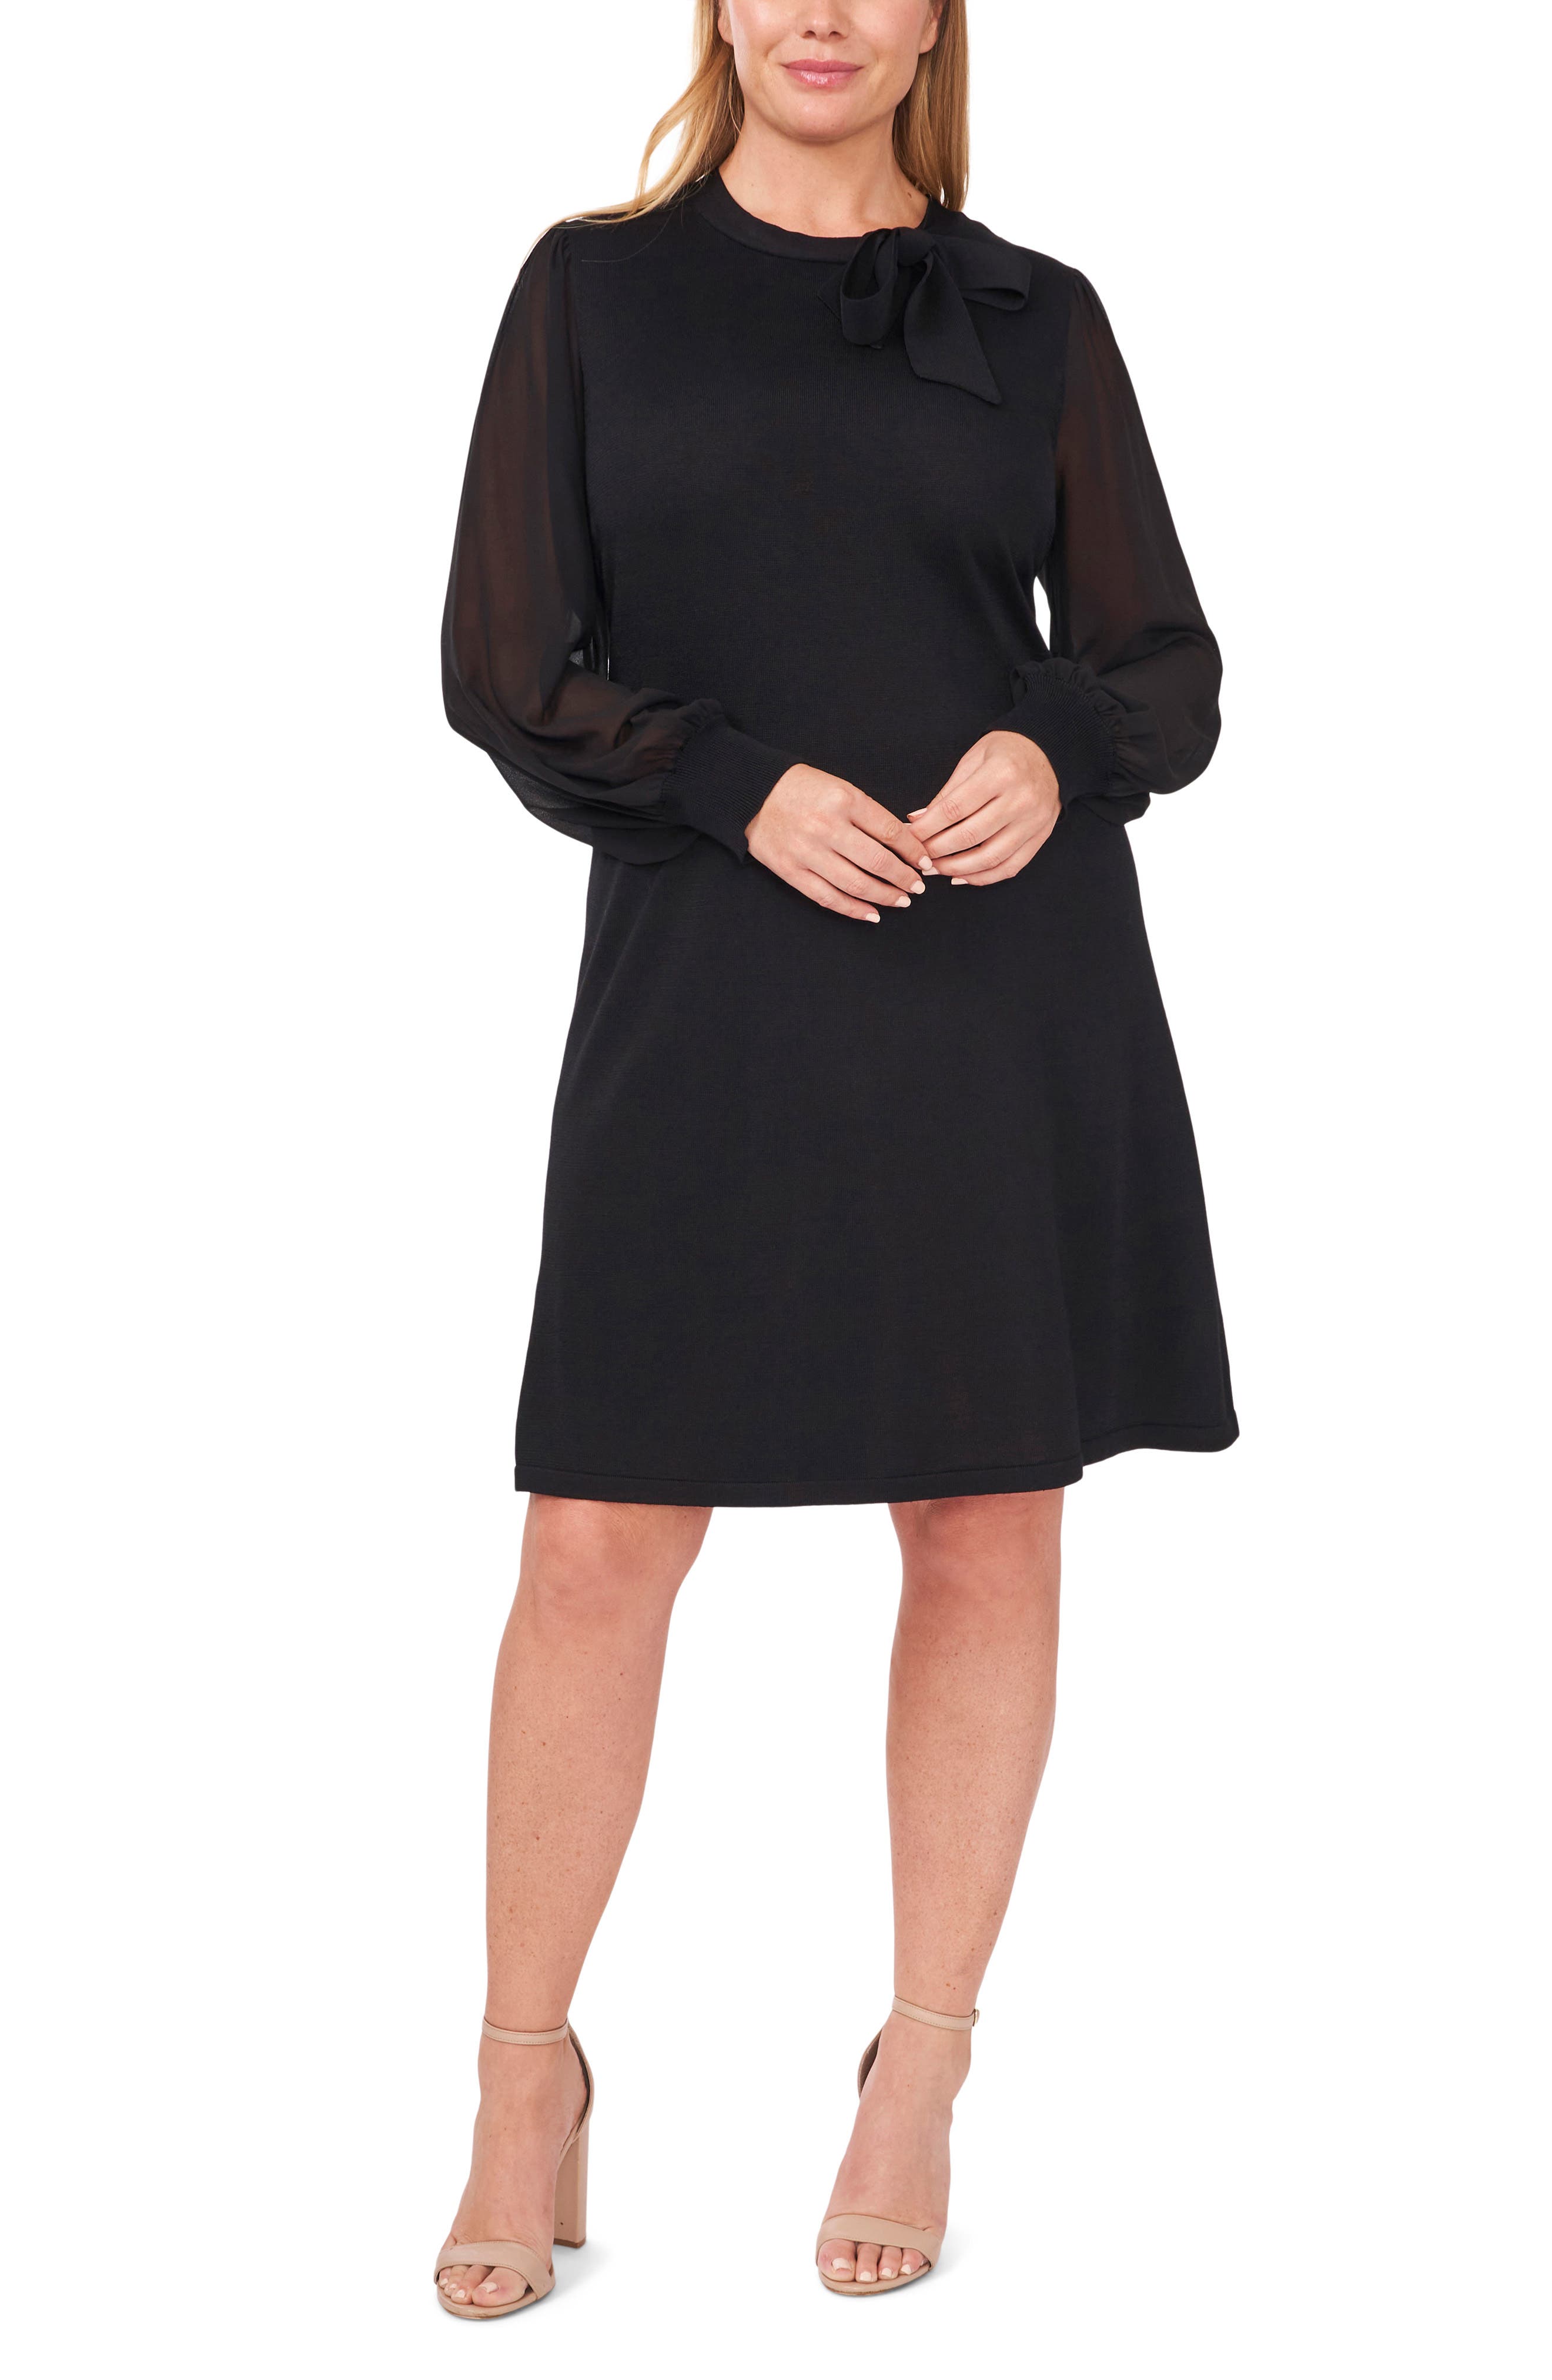 CECE NEW Women's Solid Ruffled Cold Shoulder Shift Dress TEDO